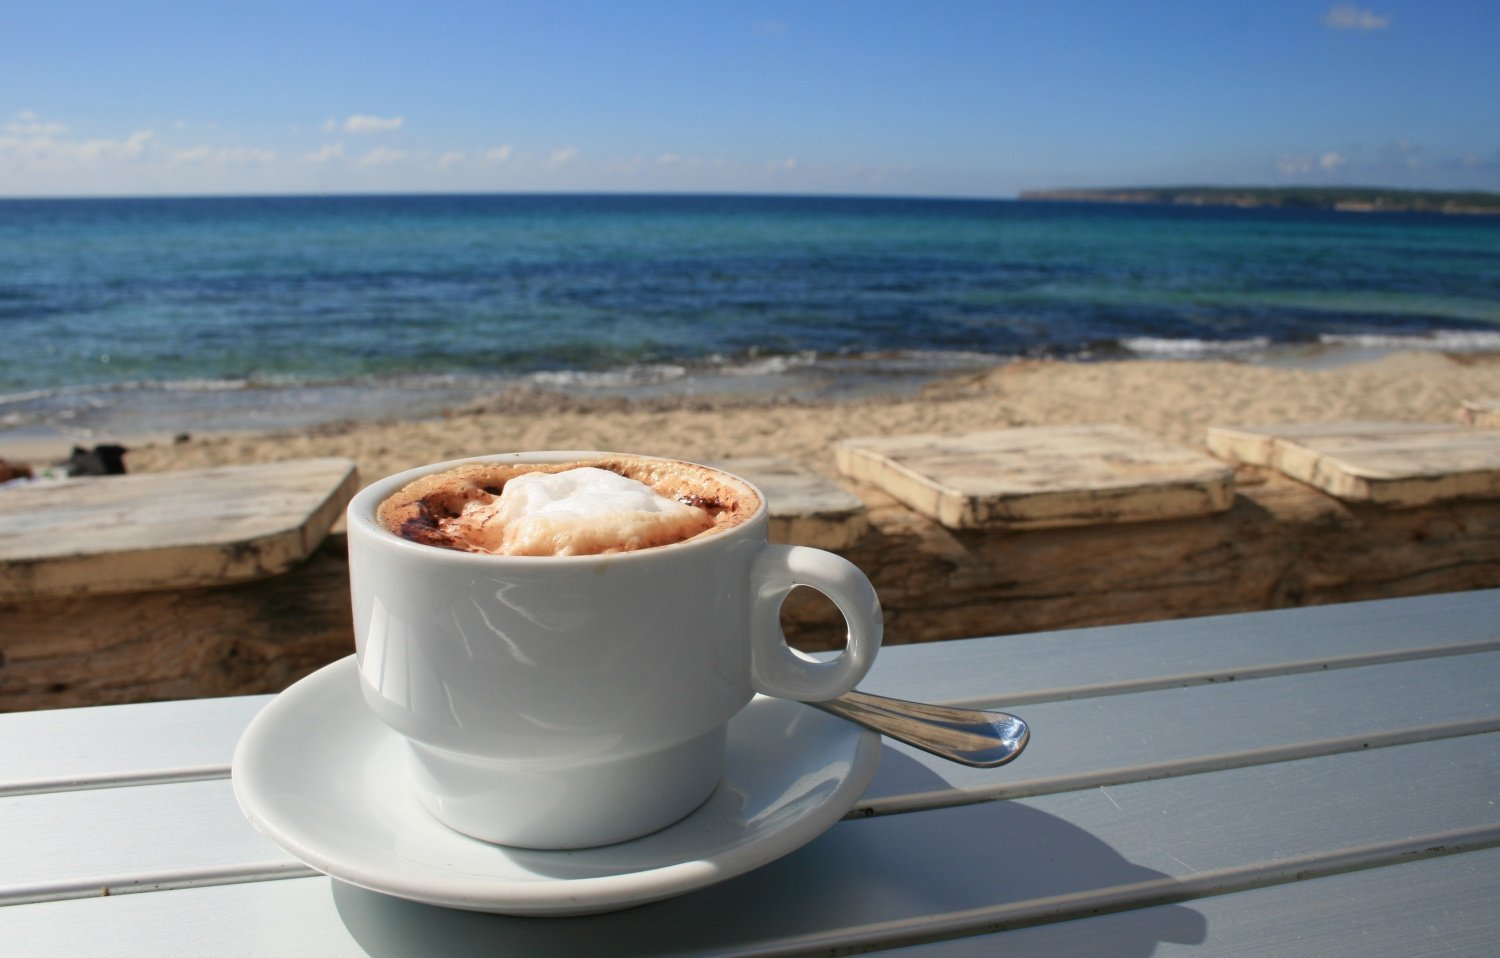 Sea cup. Чашка кофе на берегу моря. Утро на море. Утро на море с кофе. Завтрак с видом на море.